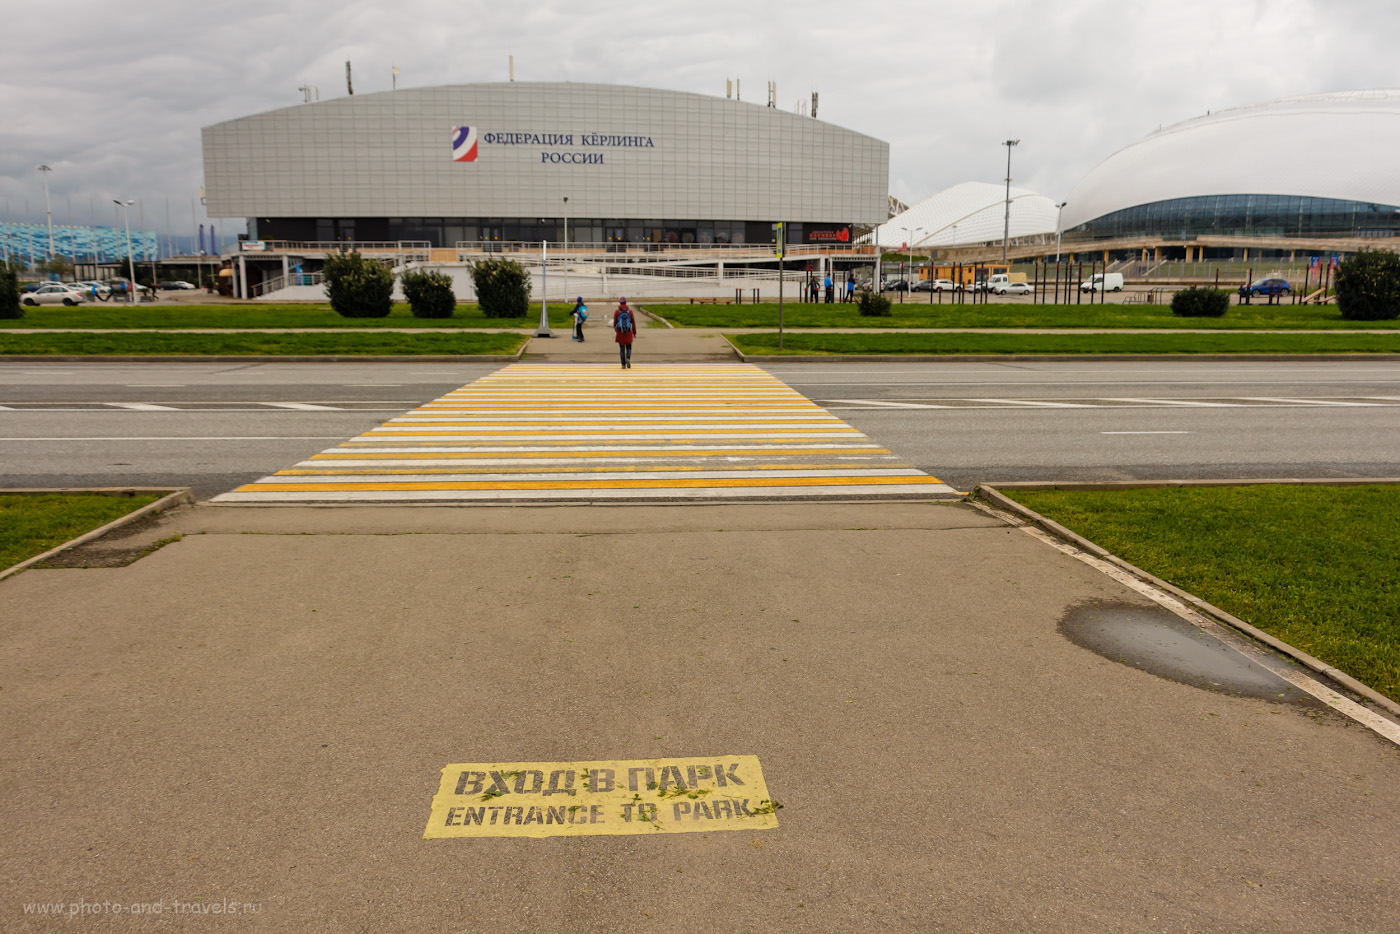 Фото 36. Вход в Олимпийский парк со стороны кёрлингового центра «Ледяной куб». 1/1250, f/4, ISO 200, 18мм.